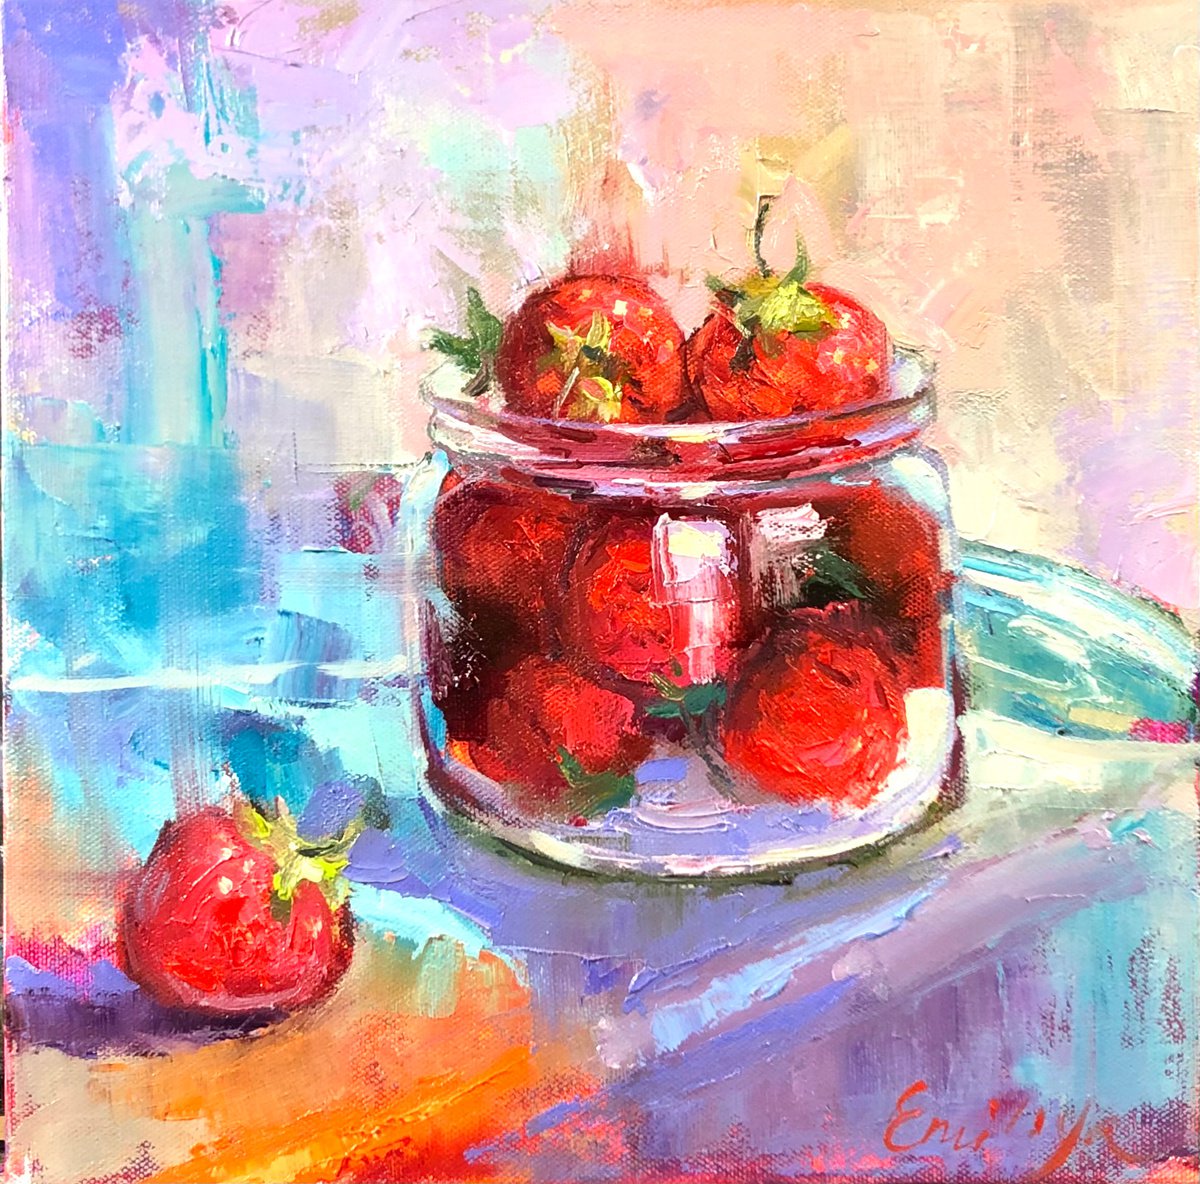 Strawberries art original oil painting still life berries impressionist impasto artwork by Emiliya Lane